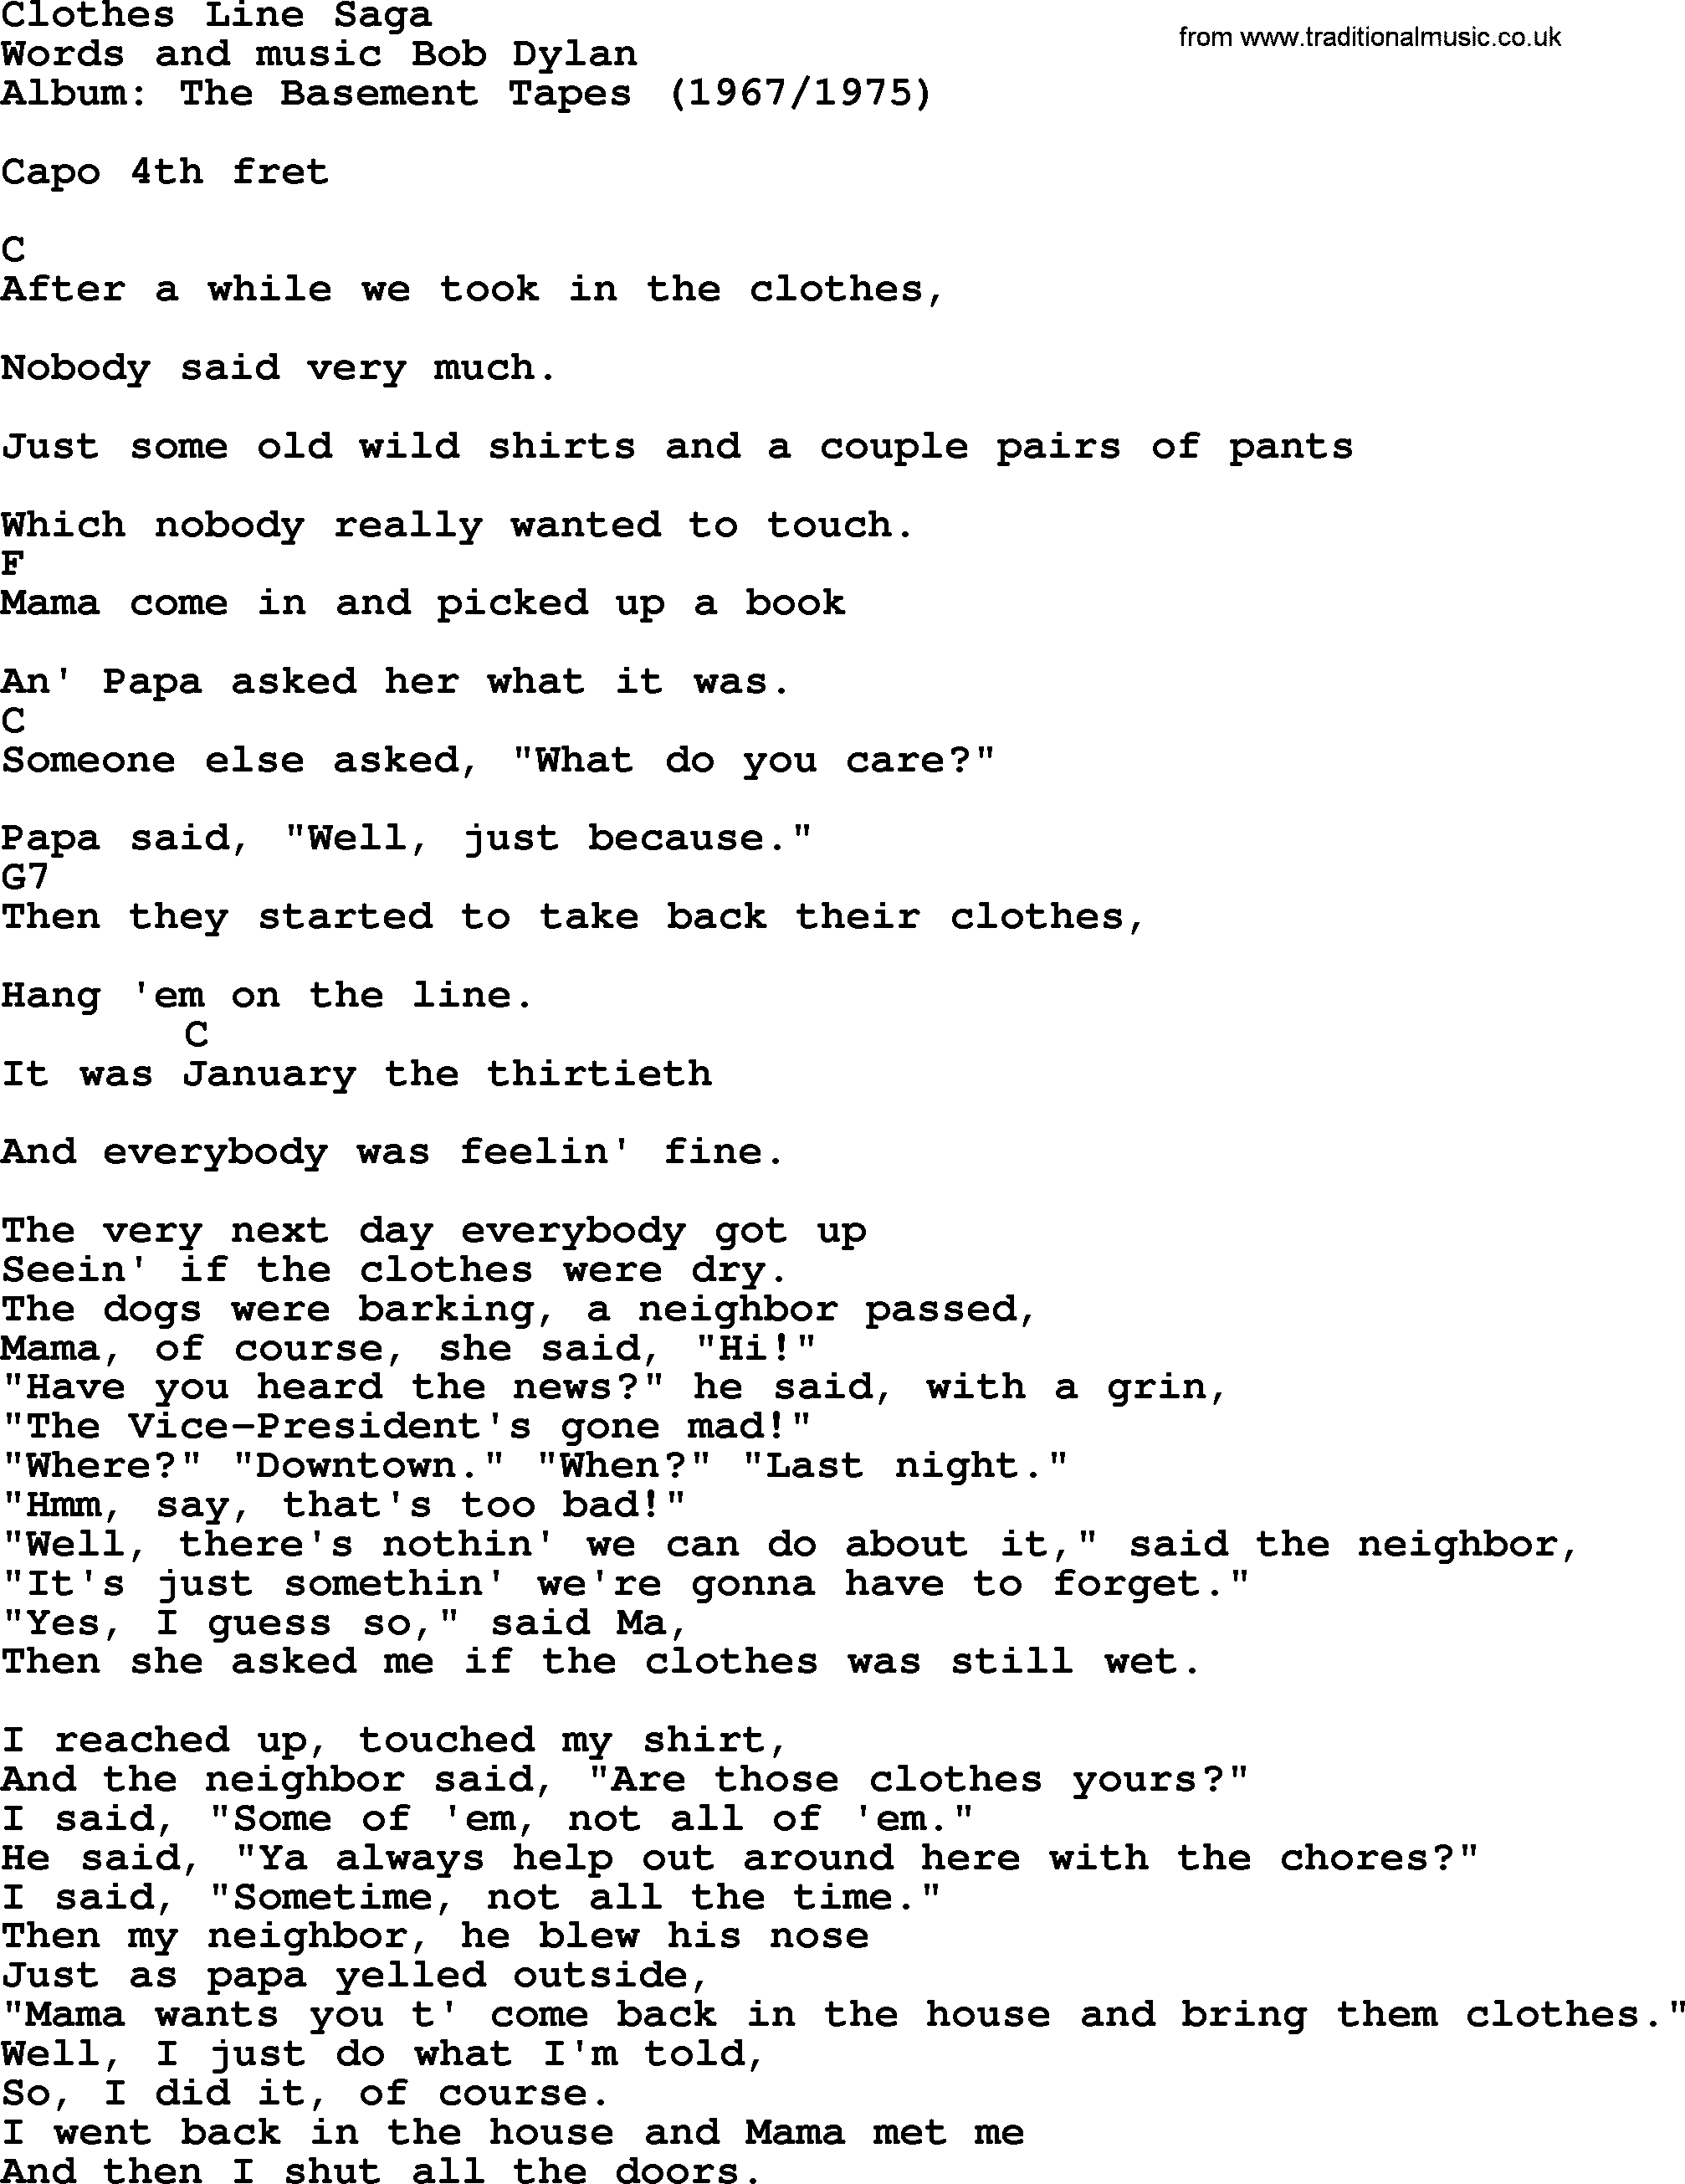 Bob Dylan song, lyrics with chords - Clothes Line Saga